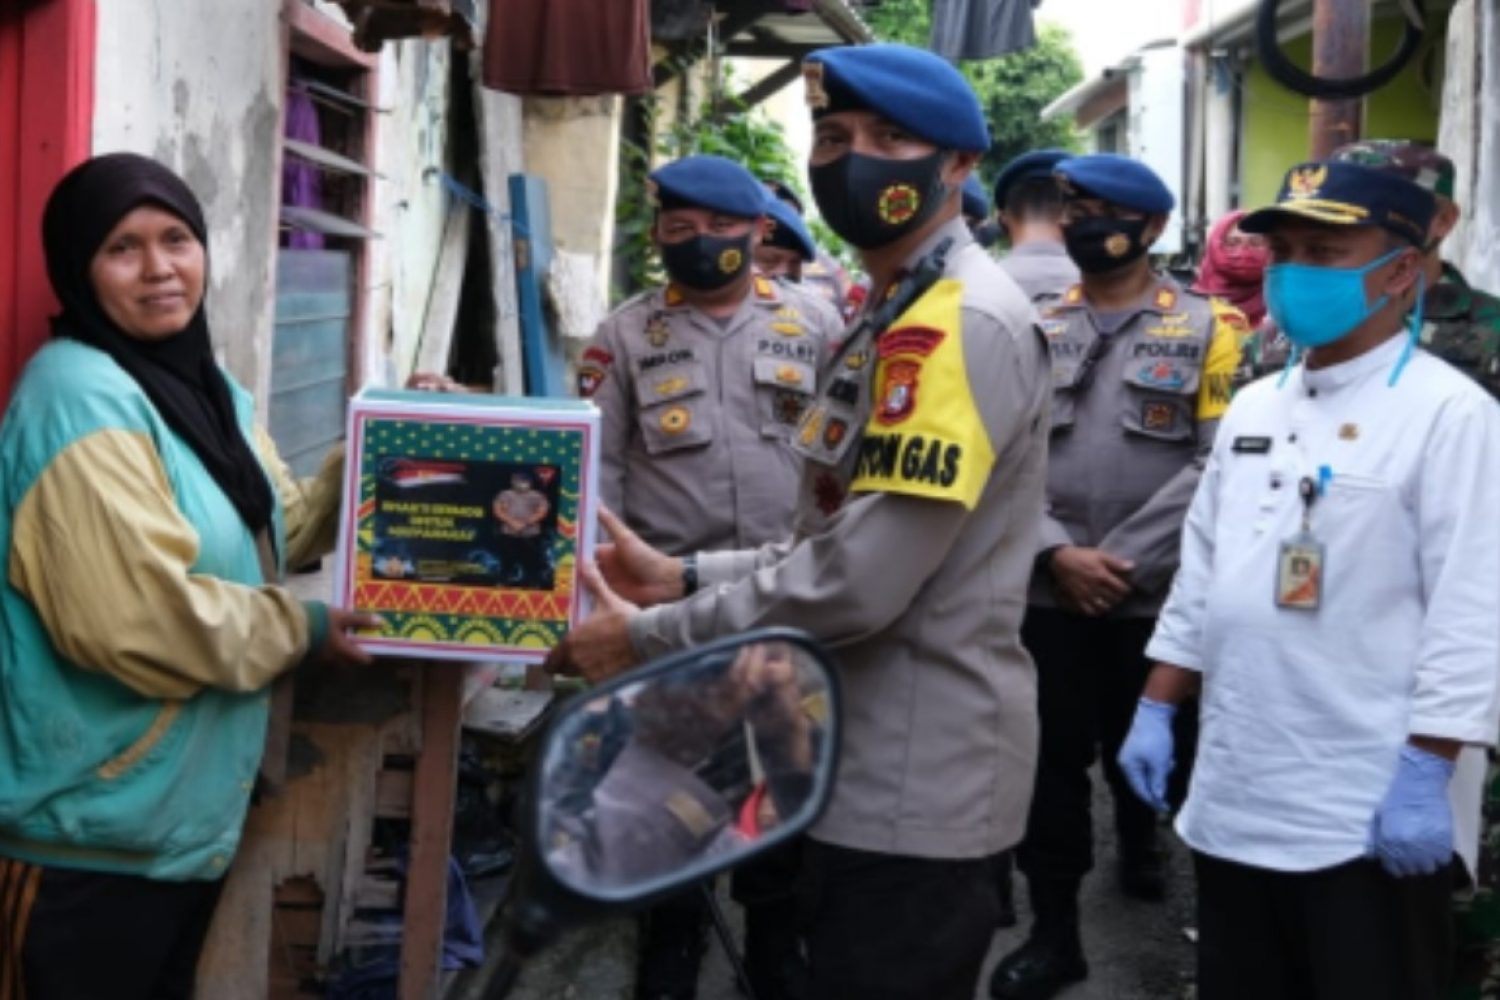 Satuan Brimob Polda Metro Jaya bersama TNI saat melaksanakan kegiatan bakti sosial serentak tahap II